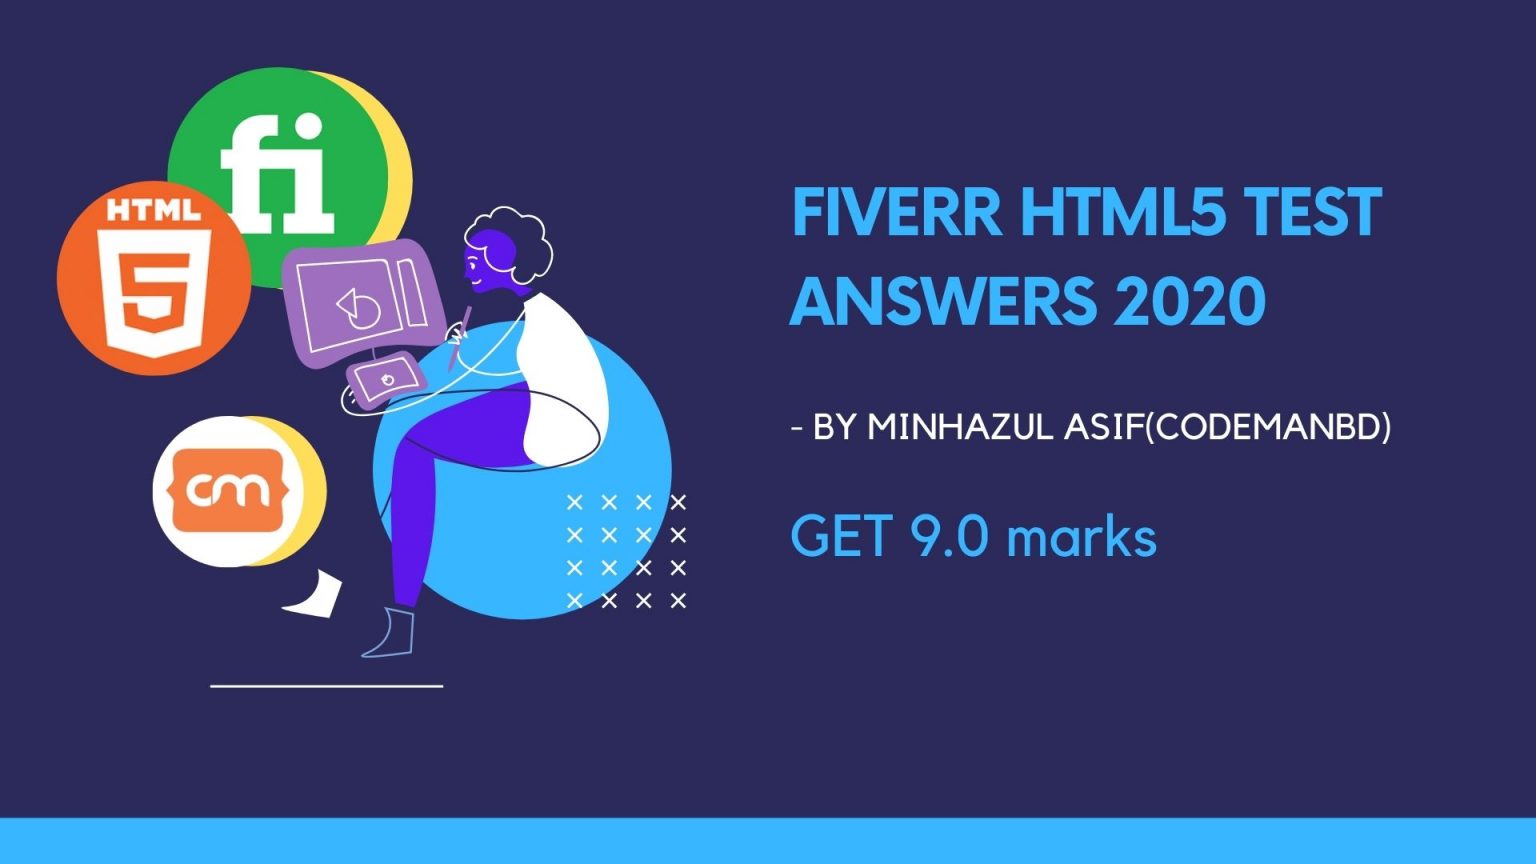 Fiverr HTML5 Test Answers 2021 Minhazul Asif's Blog